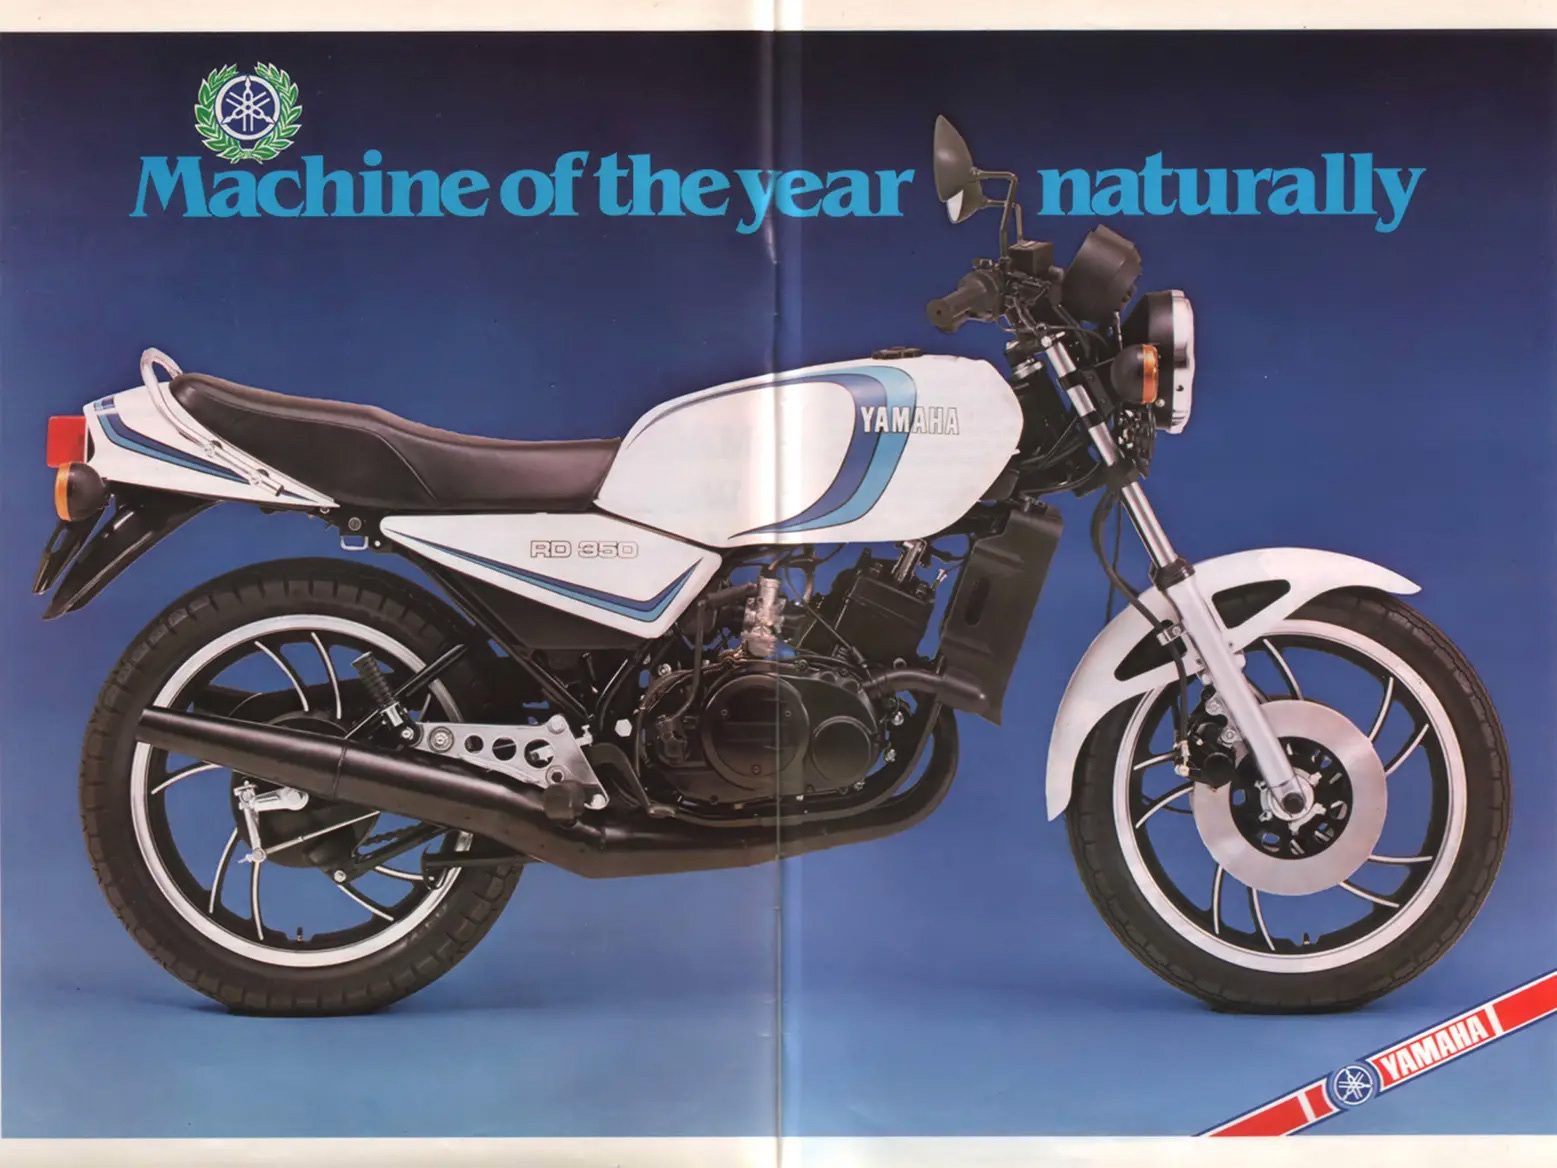 1980 Yamaha RD350LC motorcycle magazine ad